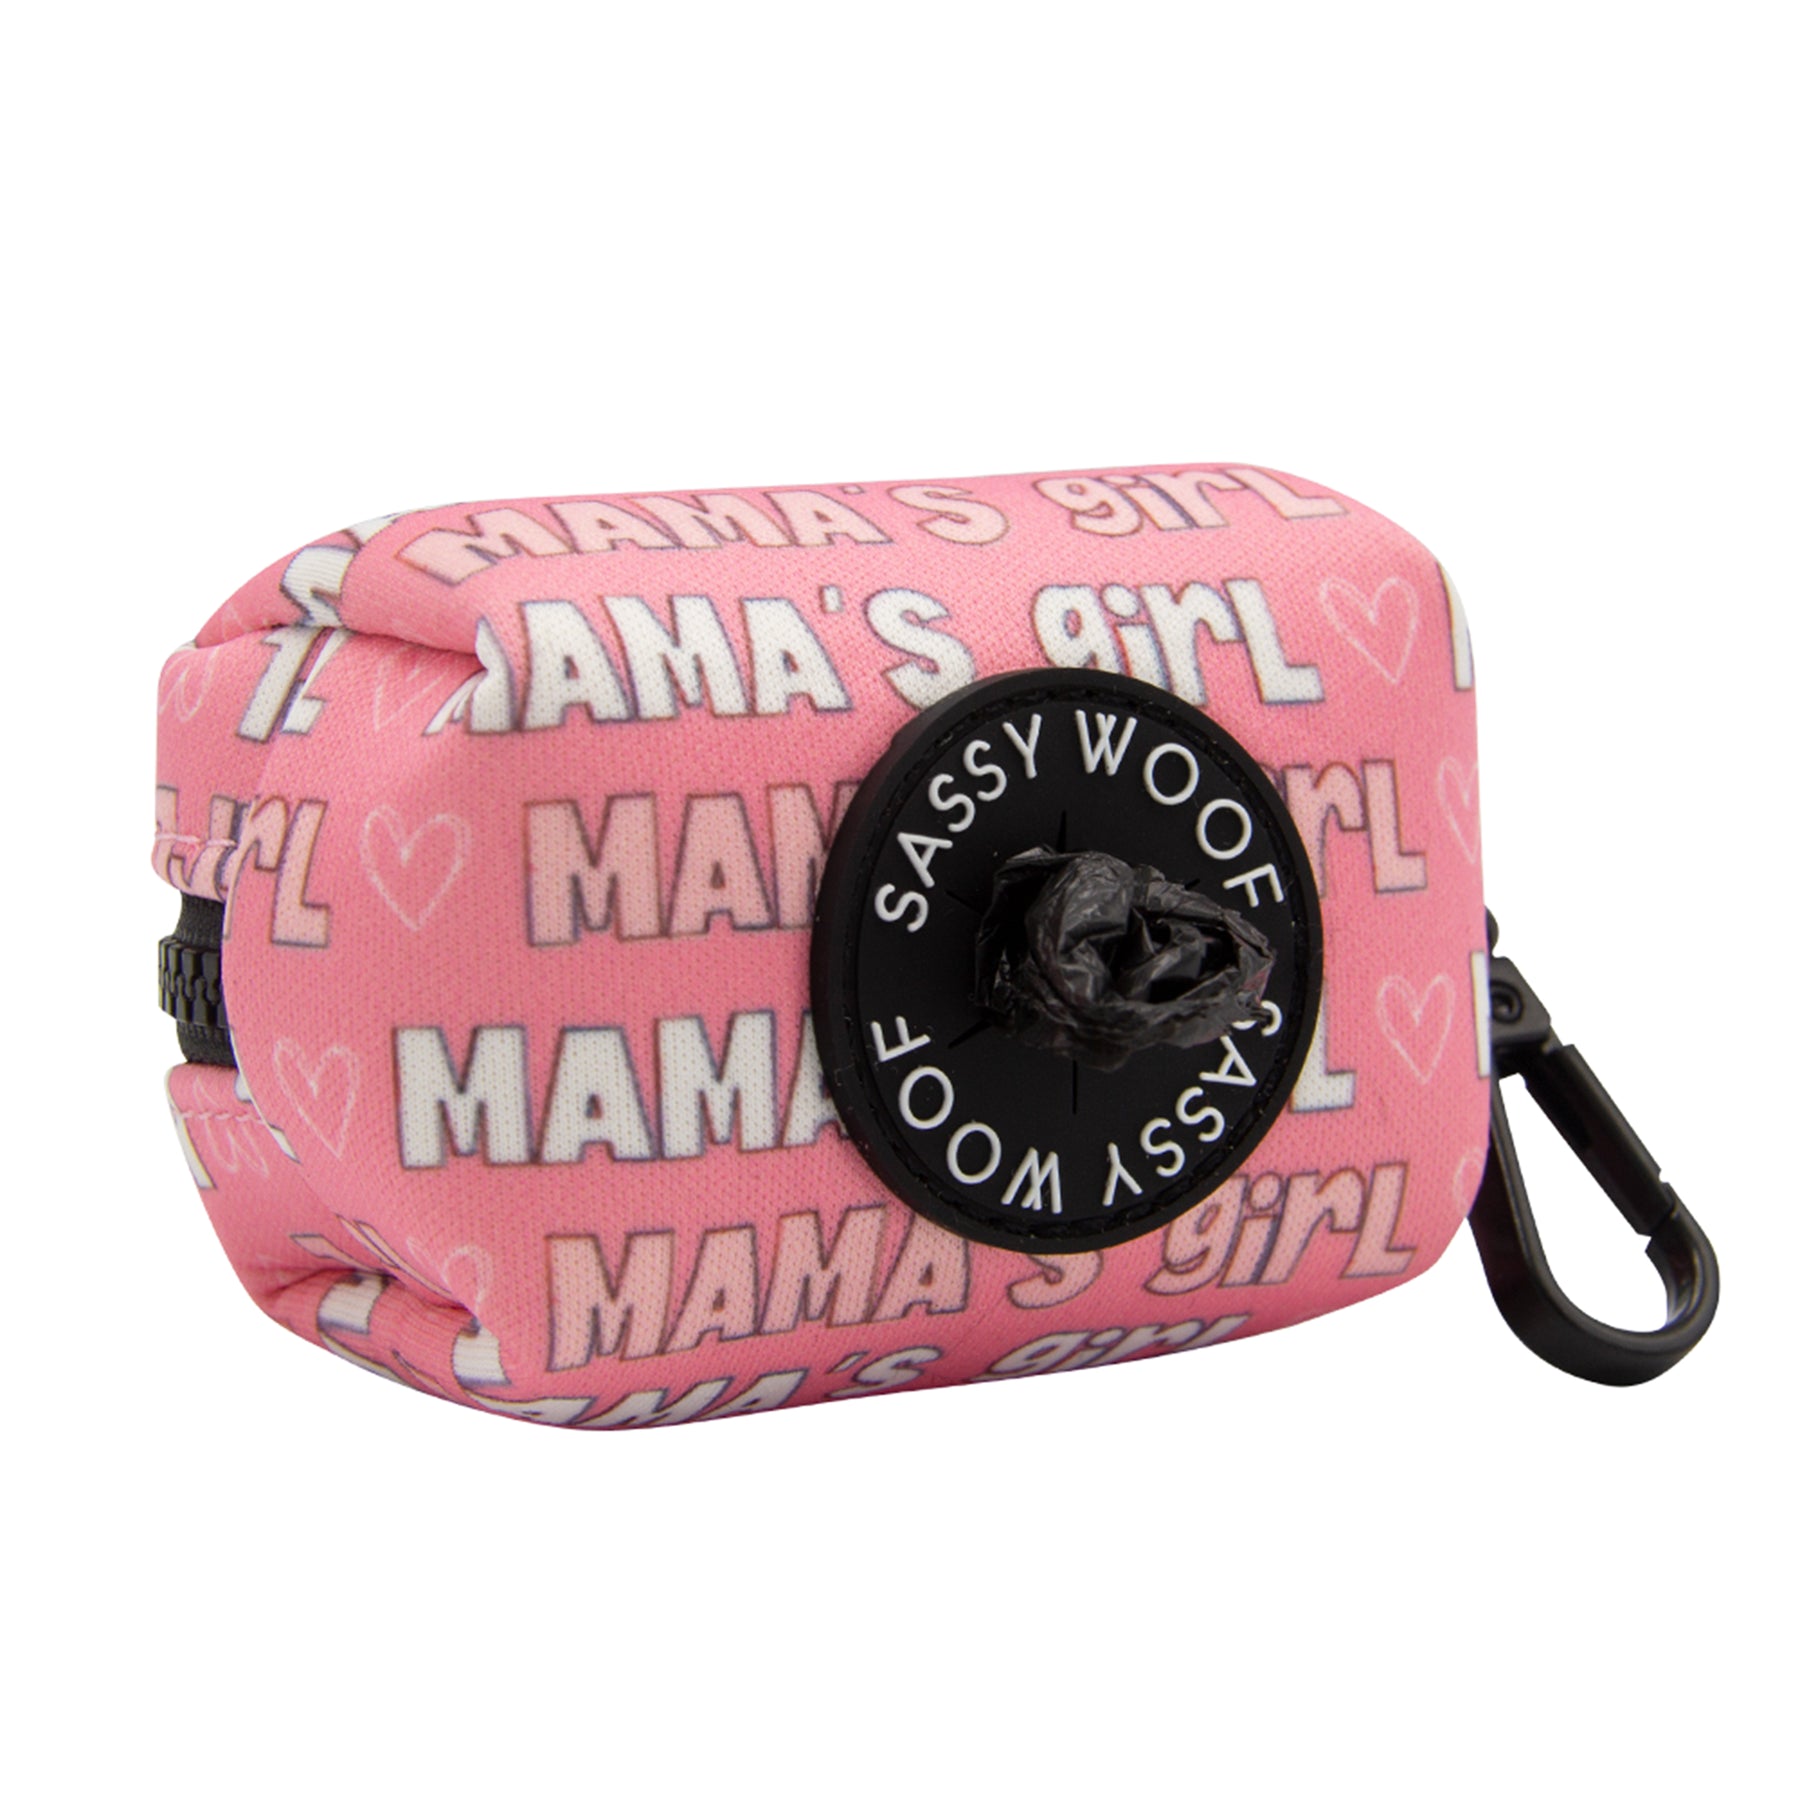 Dog Waste Bag Holder - Mama's Girl